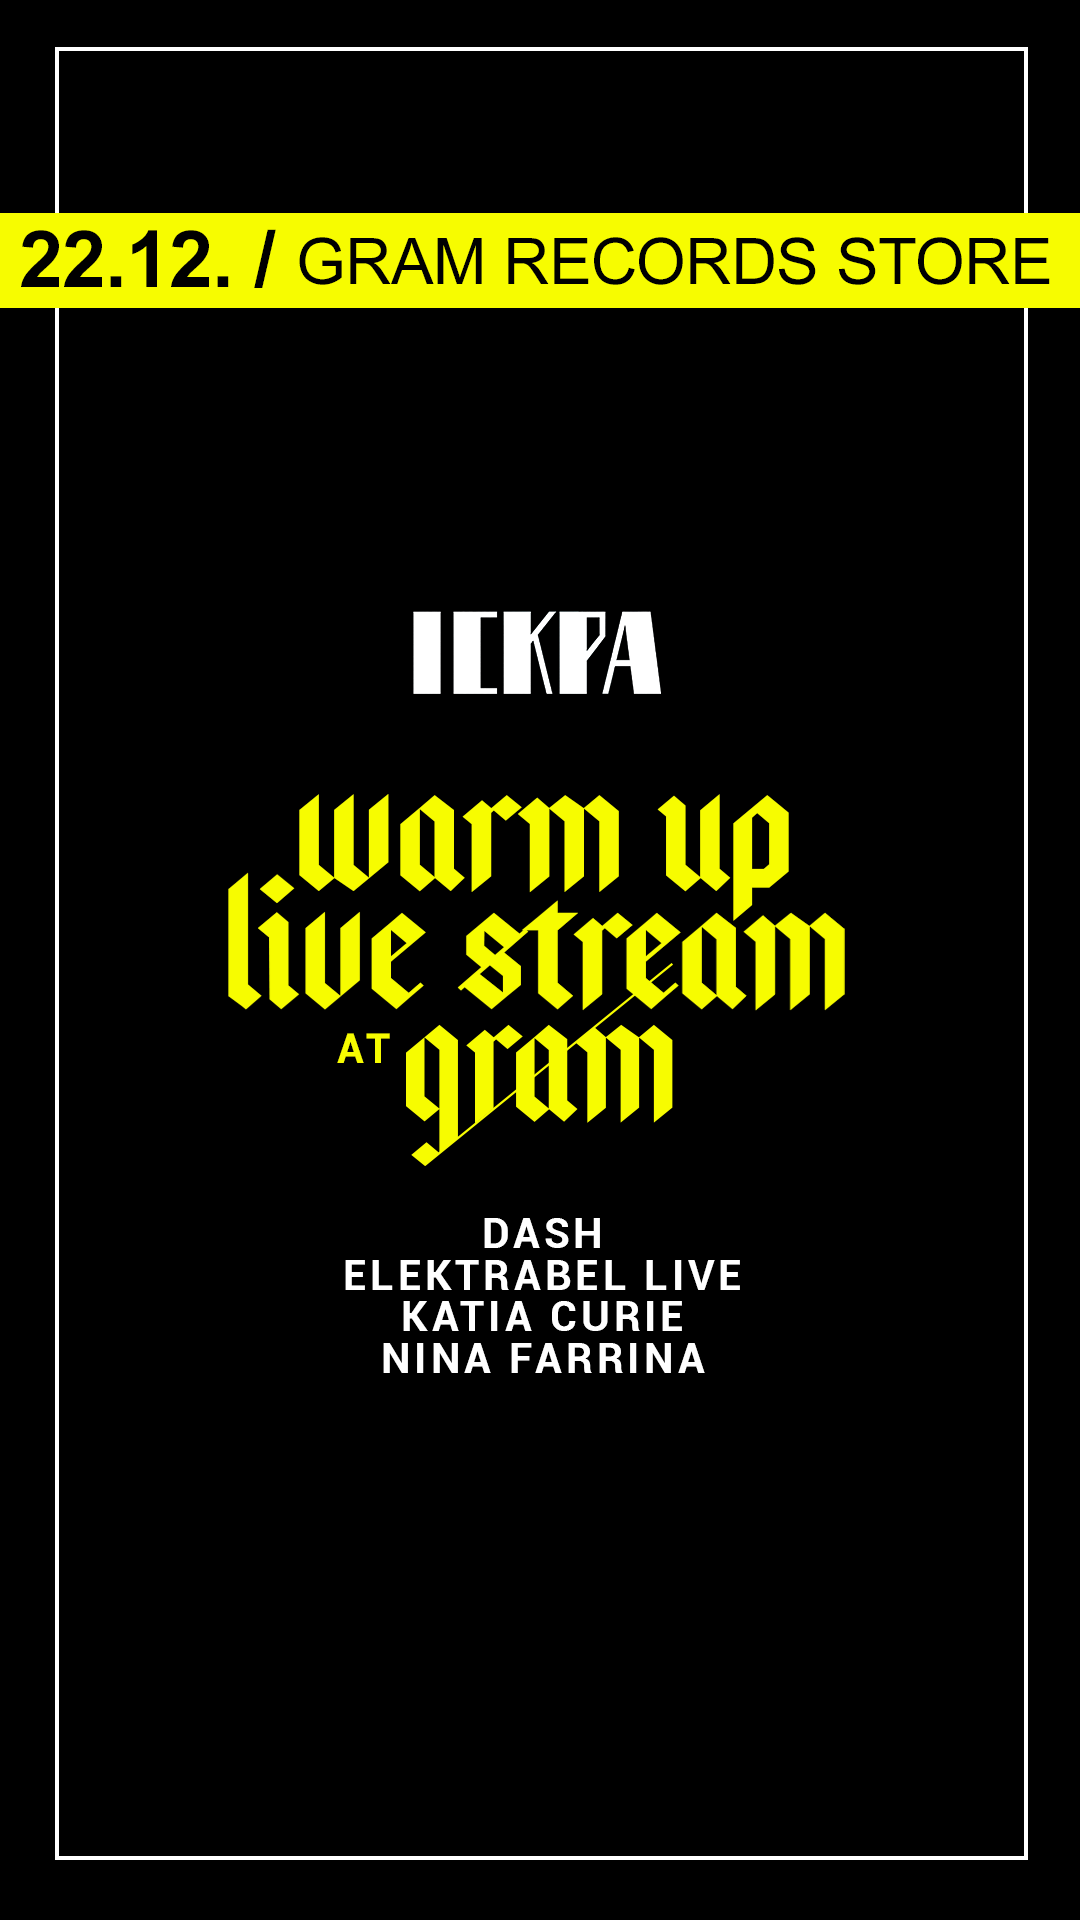 [POSTPONED] ICKPA x Gram Records with Dash, Elektrabel LIVE, Katia Curie, Nina Farrina - フライヤー表